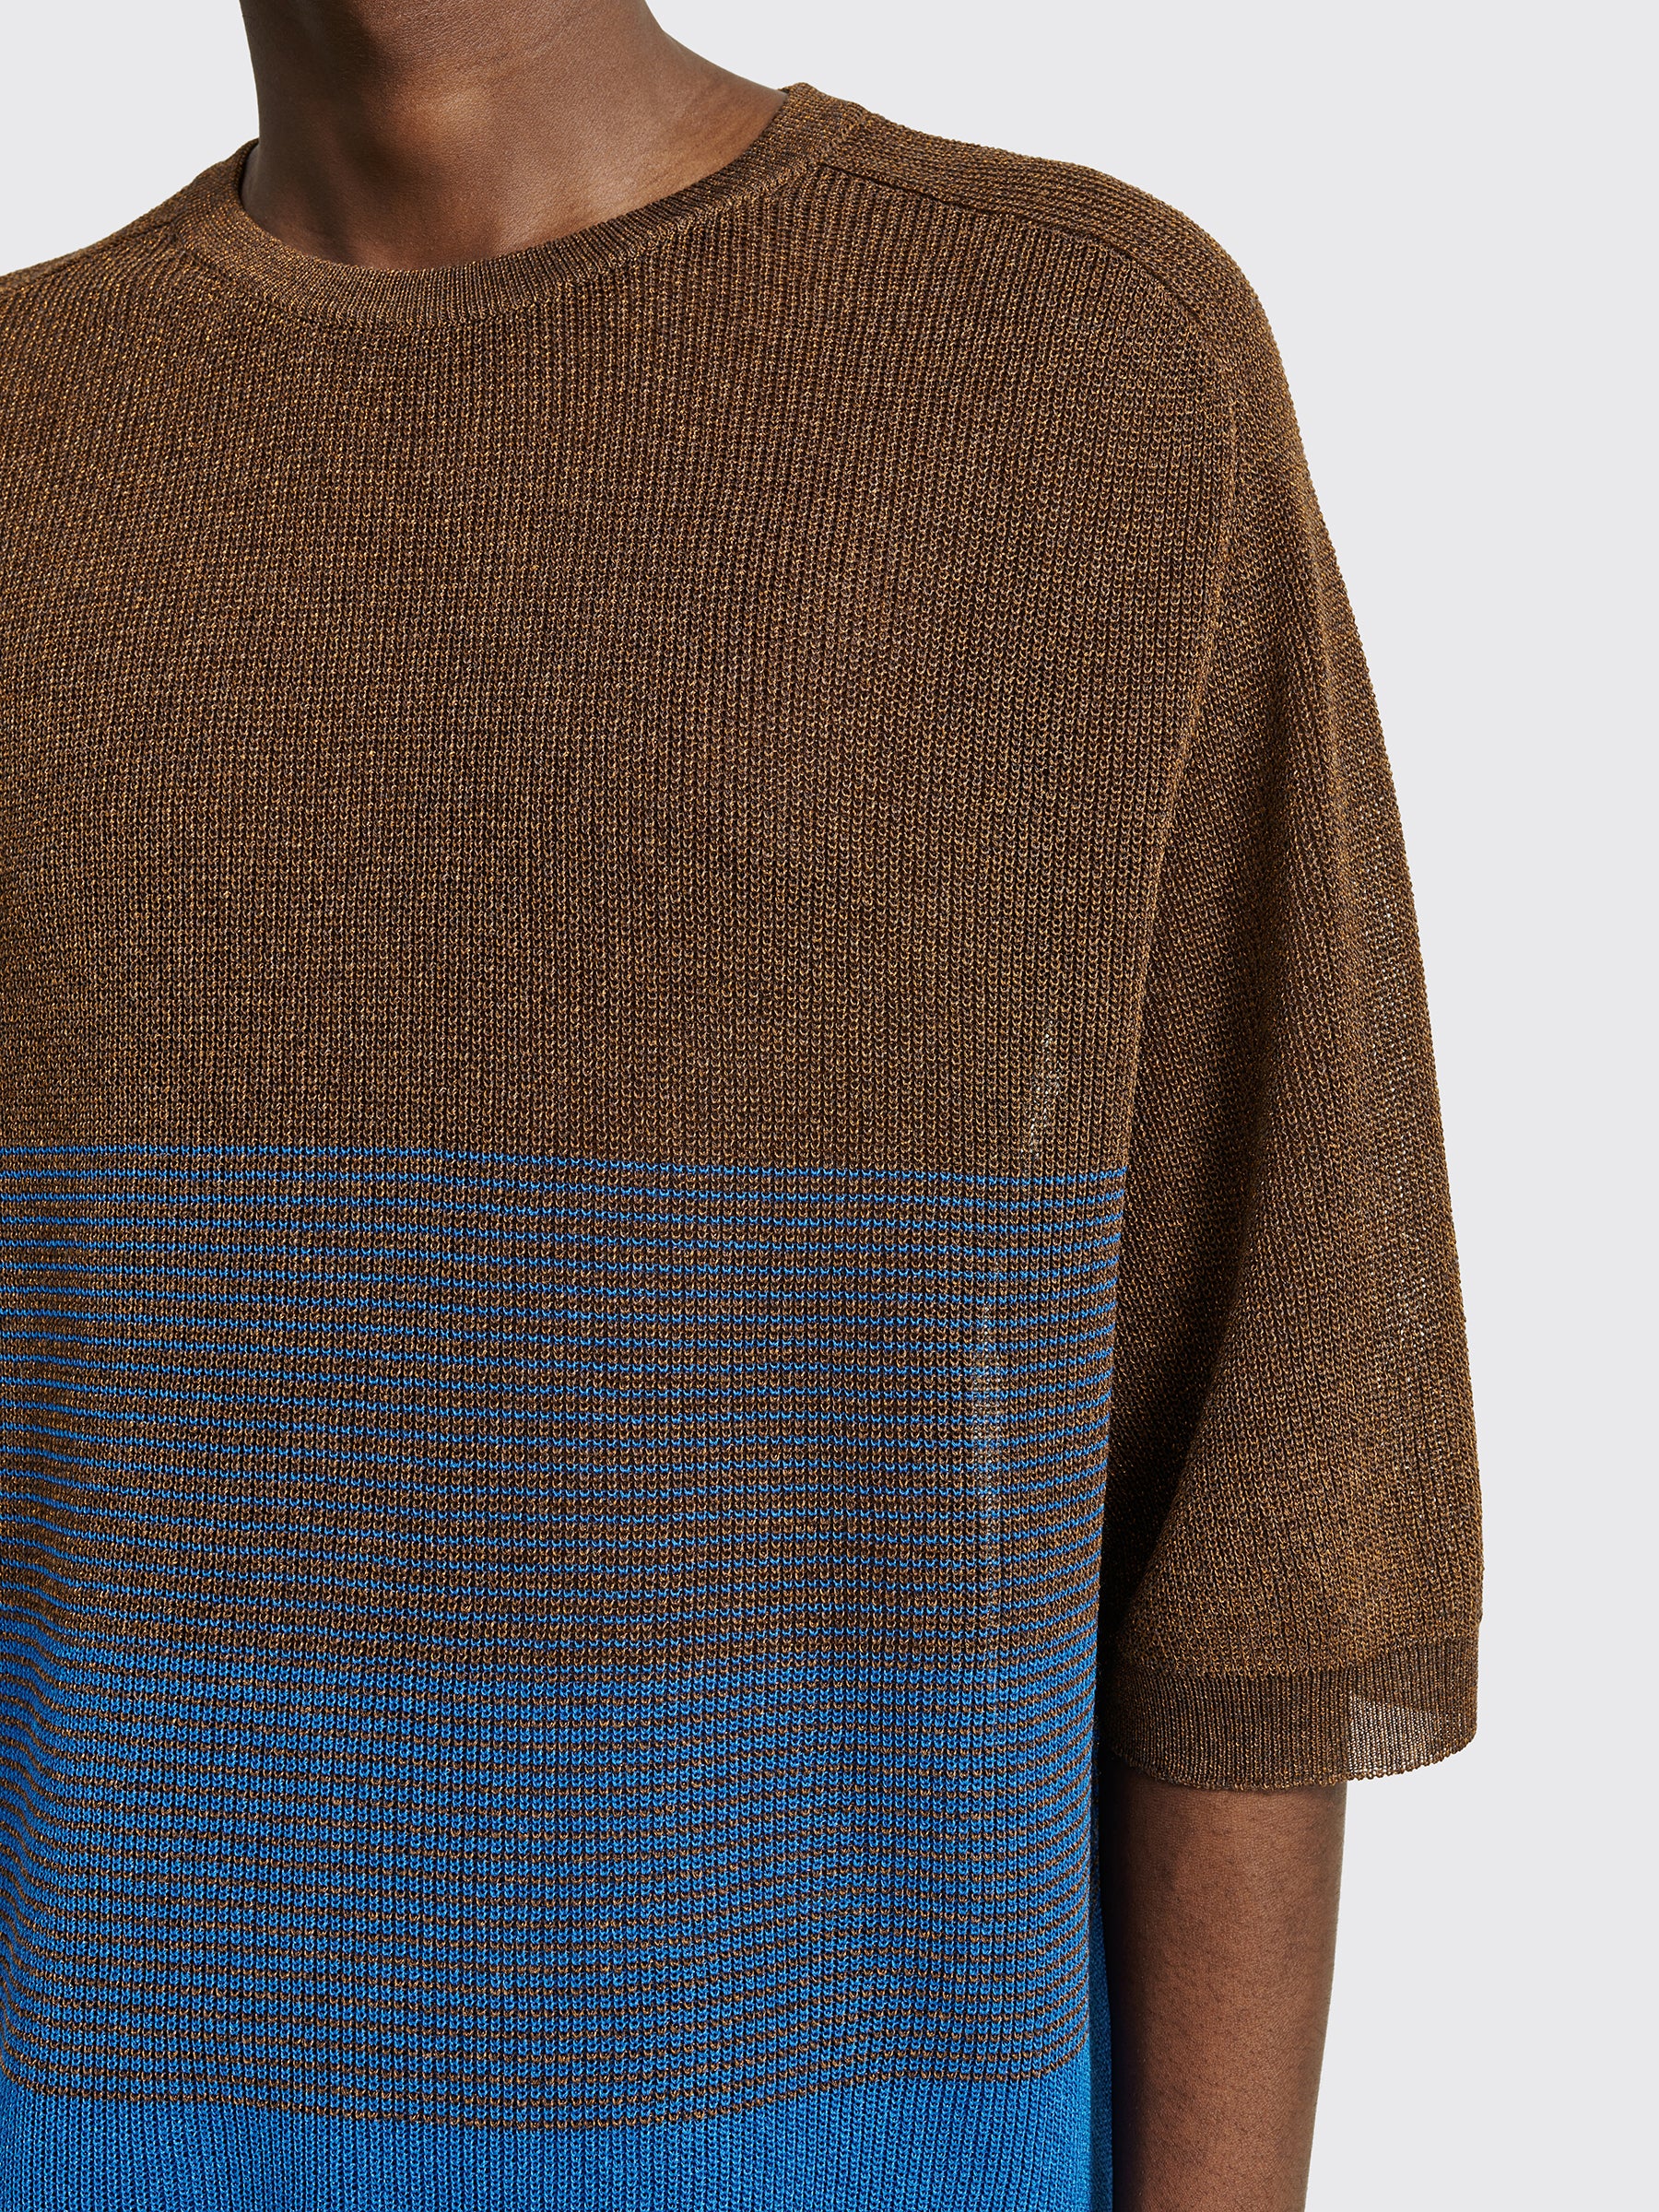 TRÈS BIEN everywear Gradient Sports Knit Brown / Blue